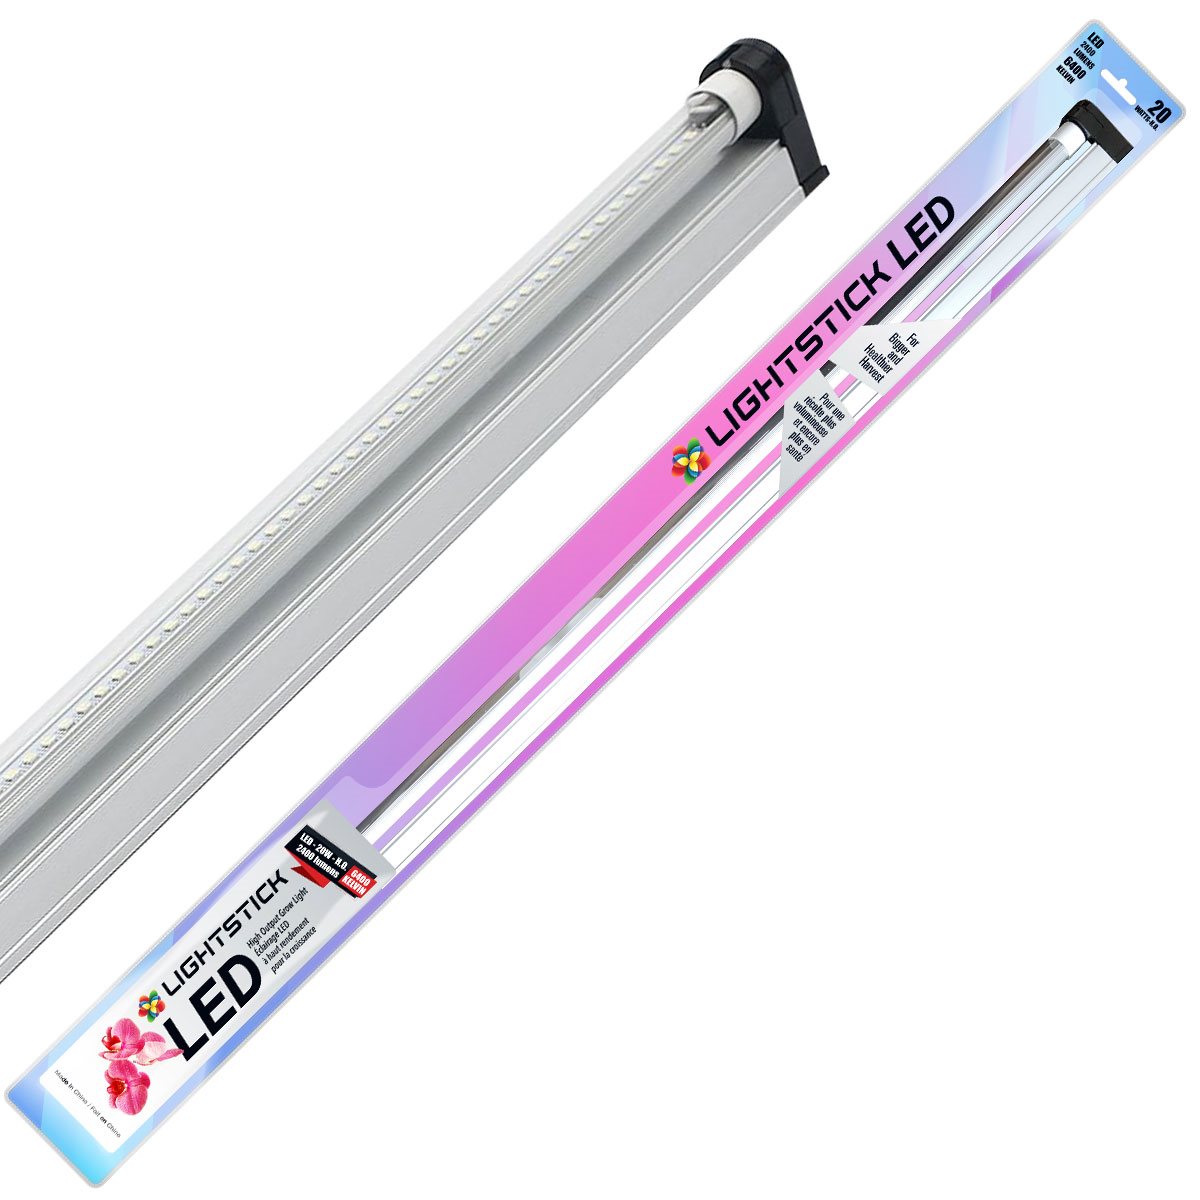 Product Image:Lightstick LED 4ft Grow Light Strip 20W